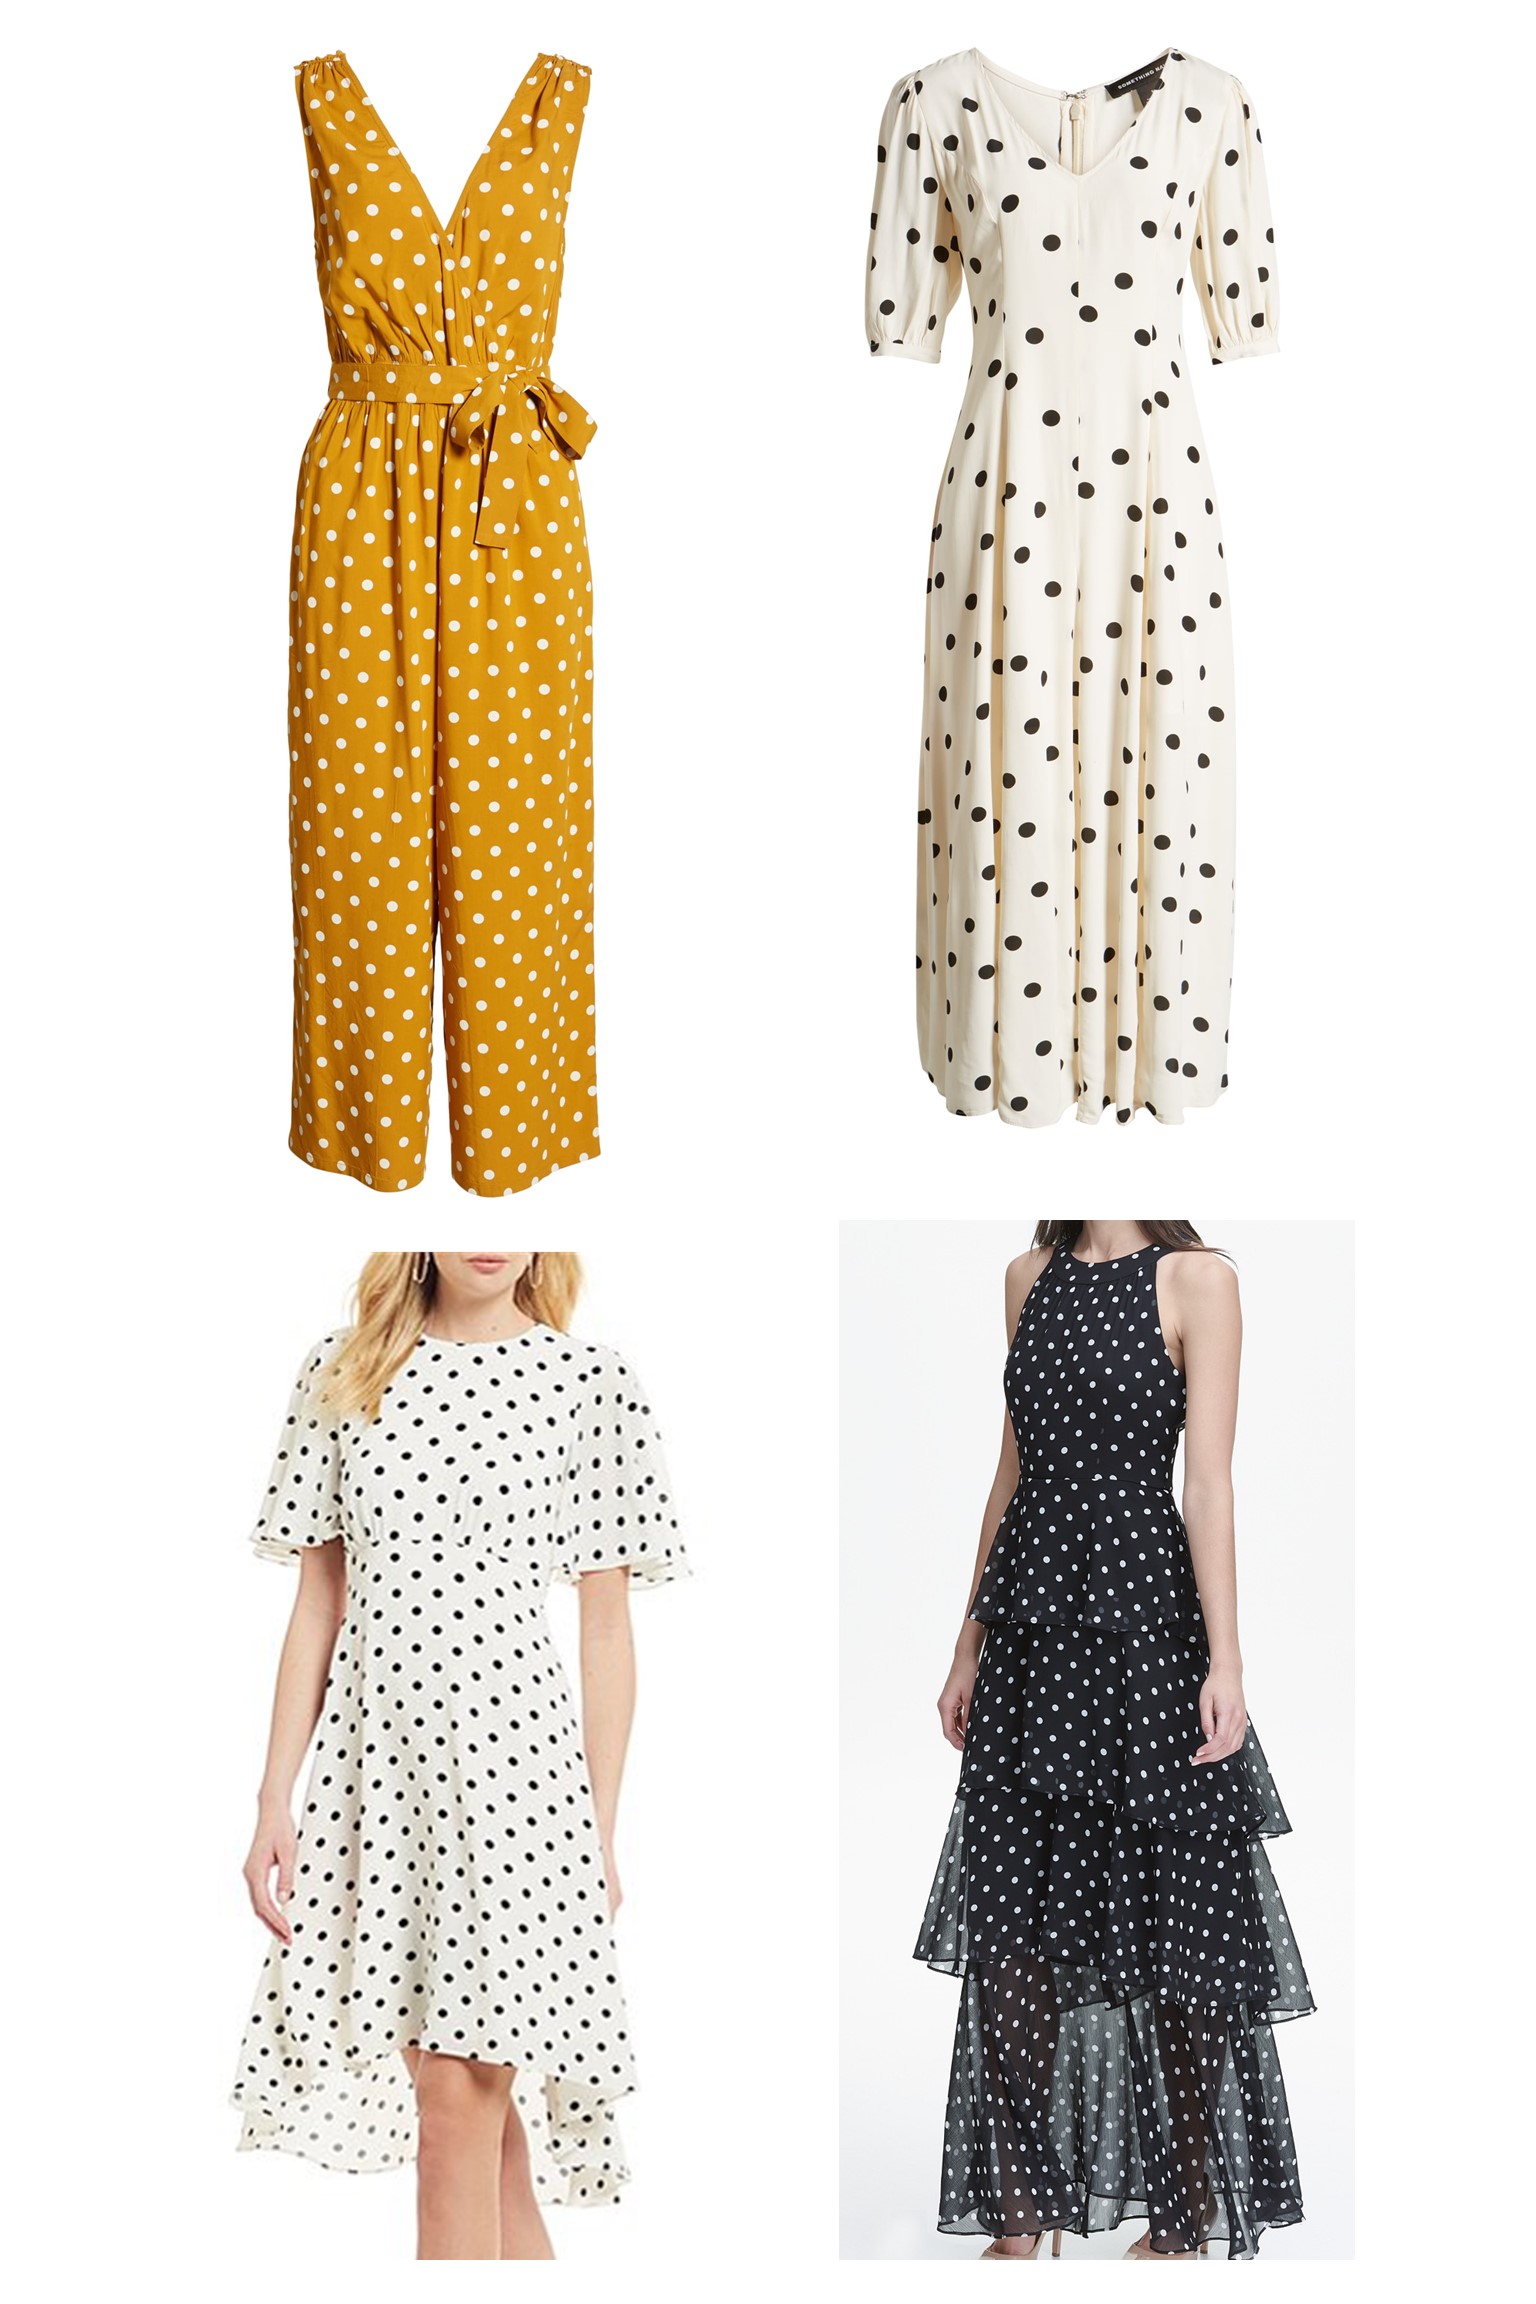 Summer Fashion Trends - Polka Dots